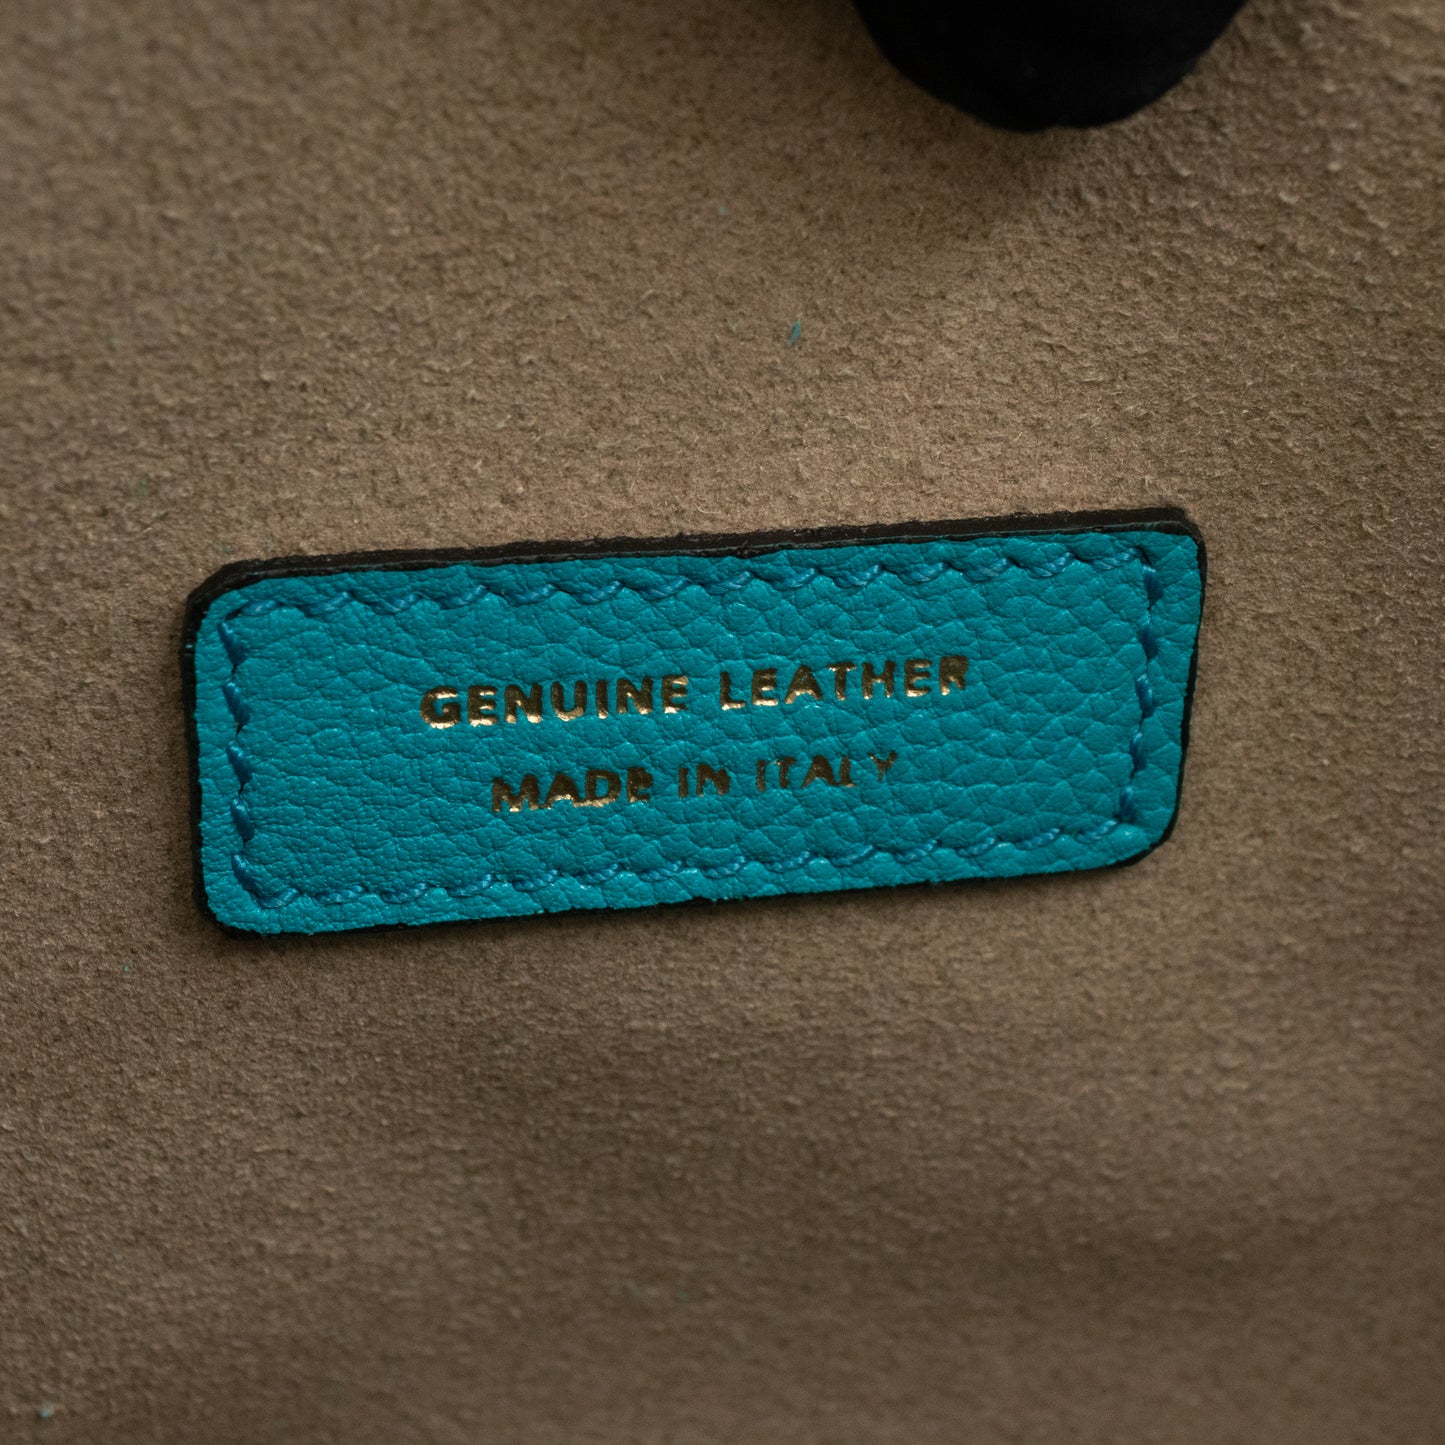 T Timeless Mini Crossbody Bag Turquoise Leather